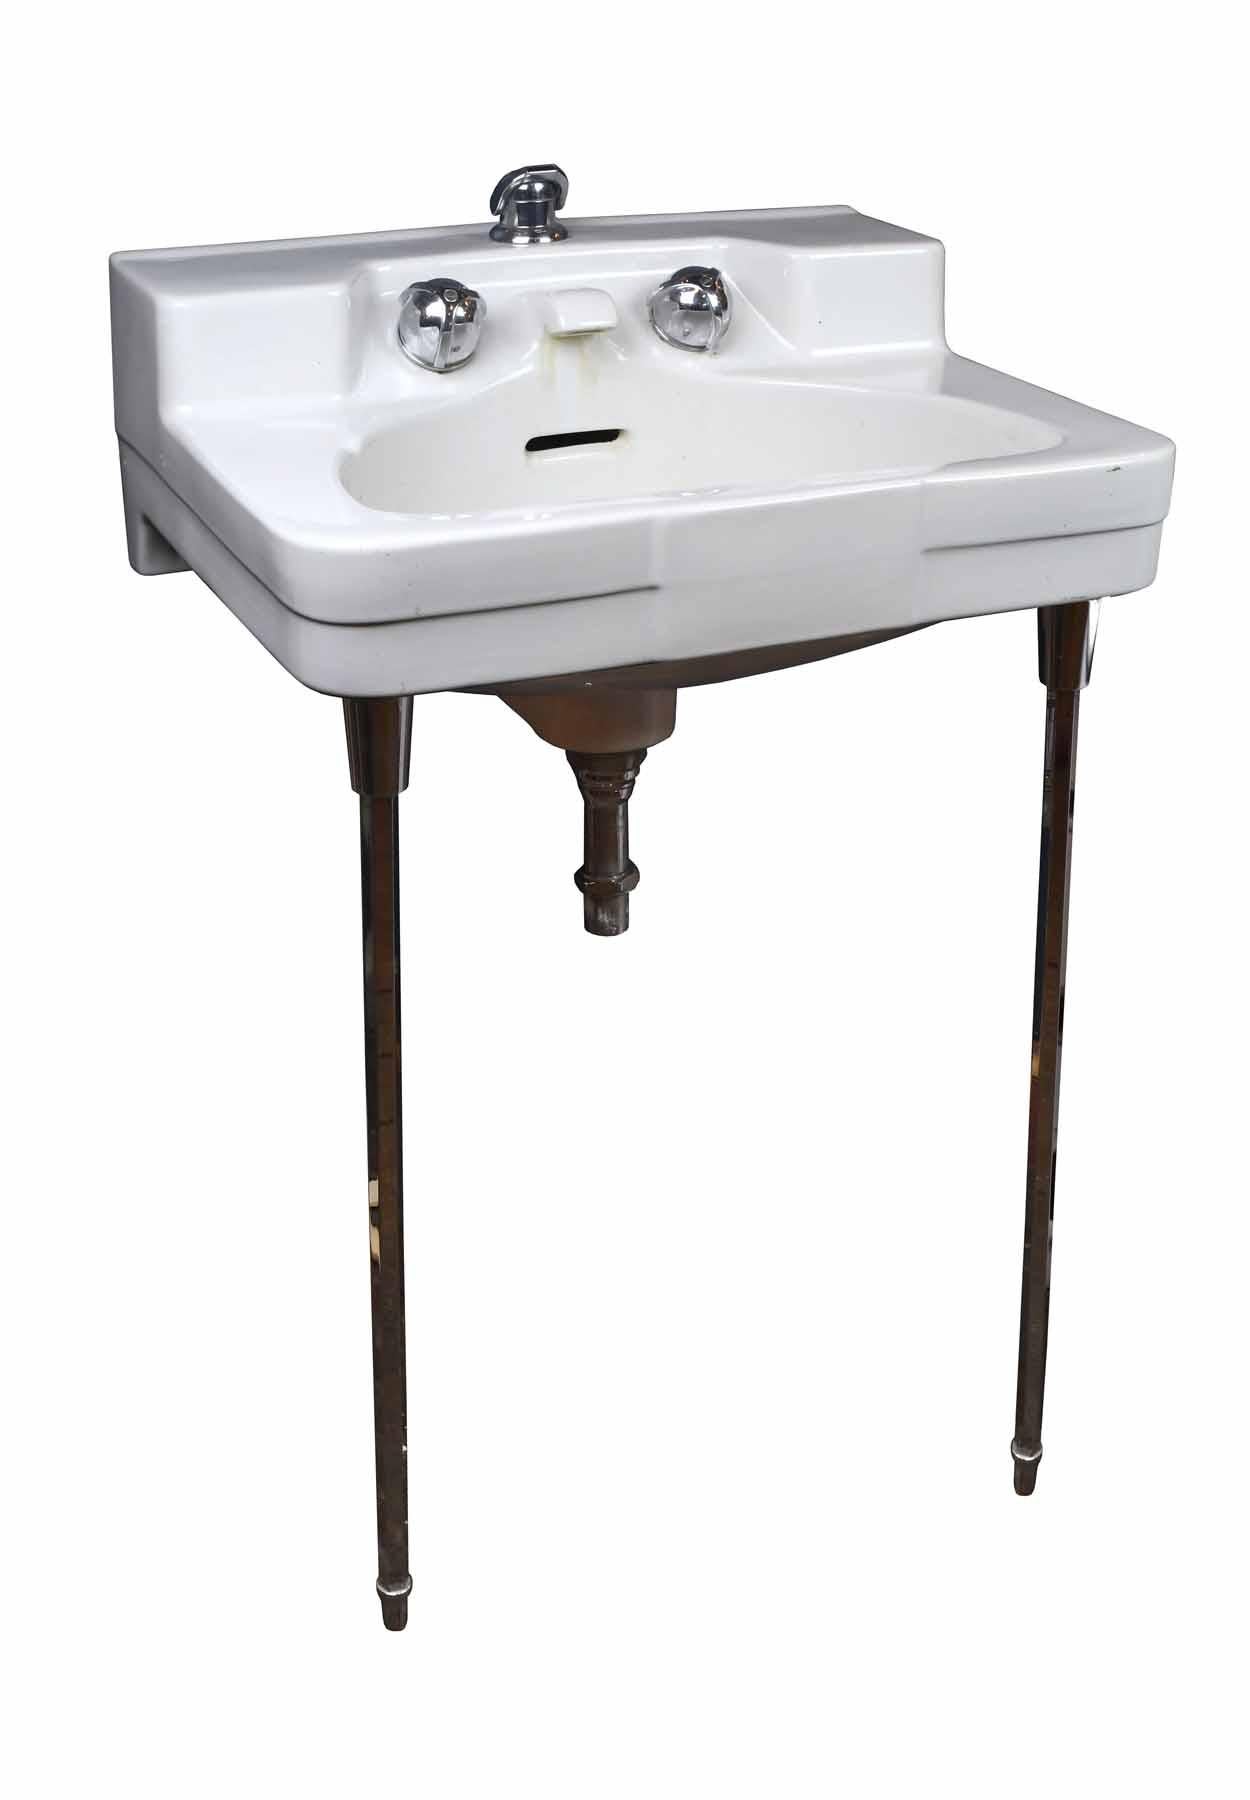 1950s bathroom sink